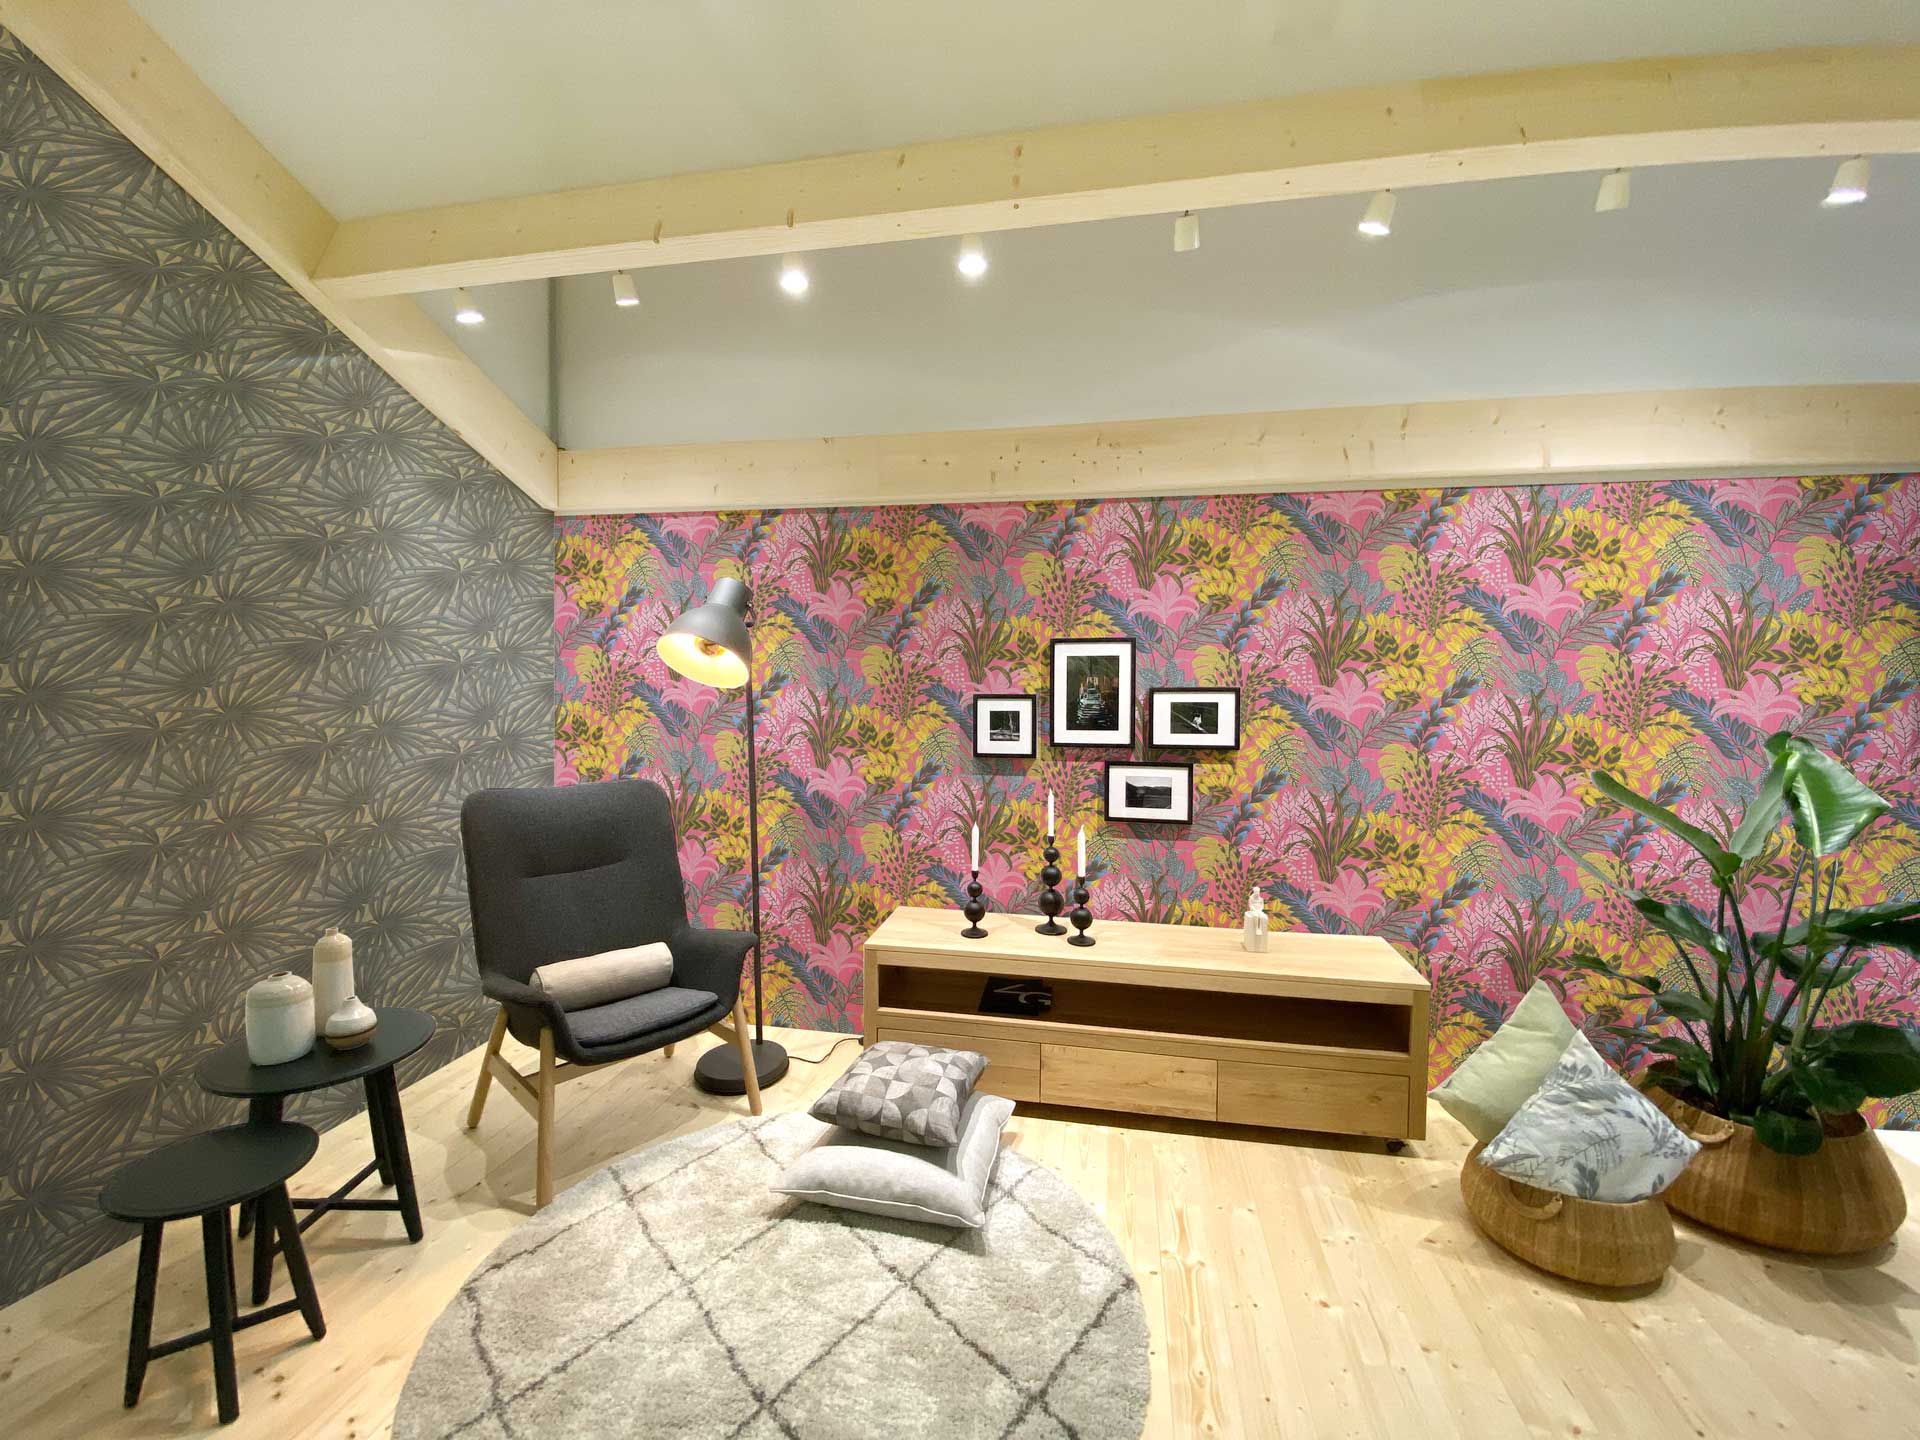 Digitally wallpapered living room example motif after